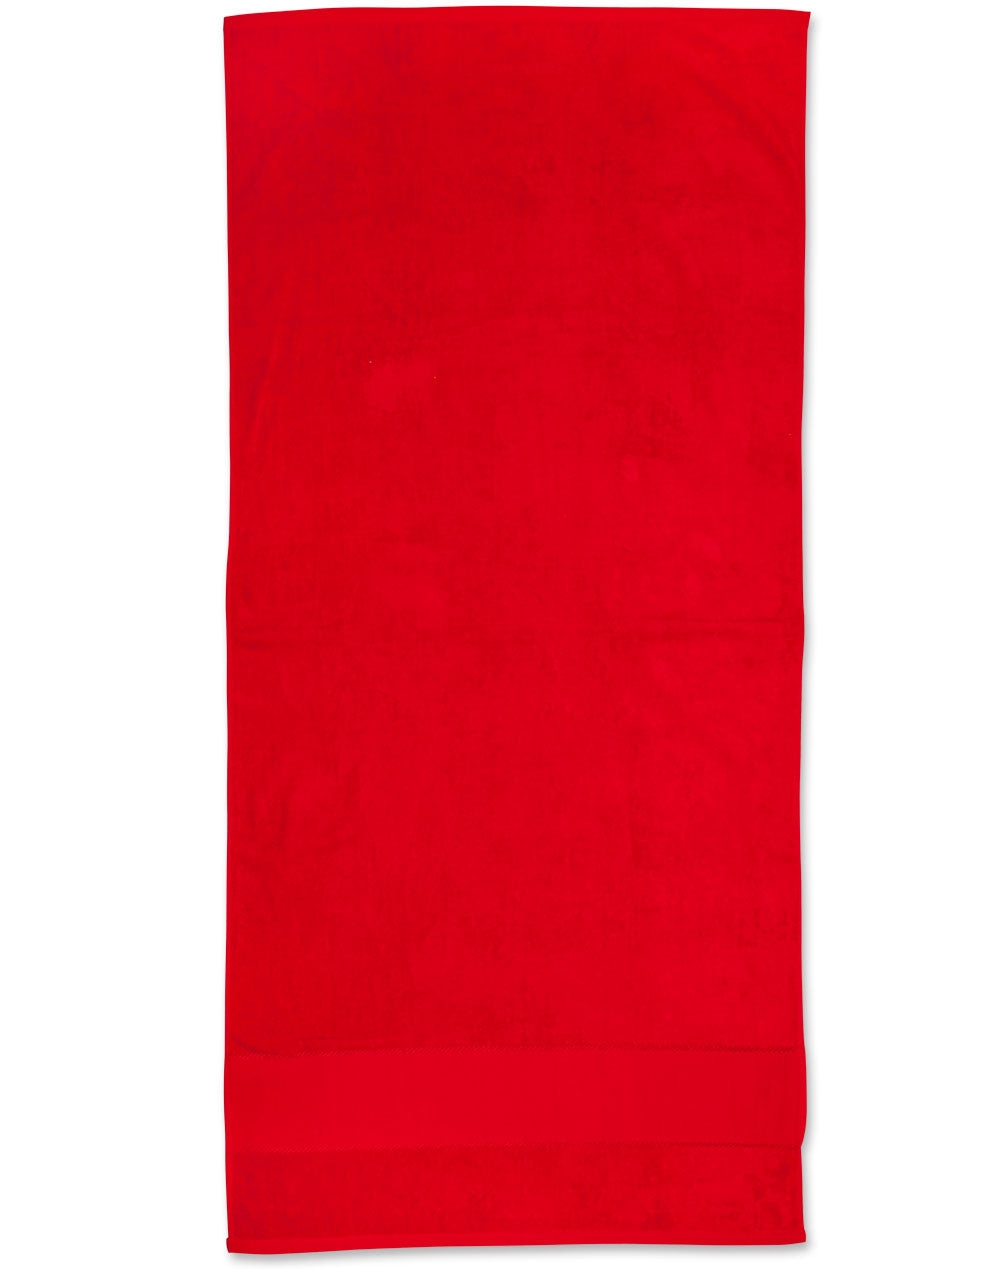 100's & 1000's SWIM towel - Red